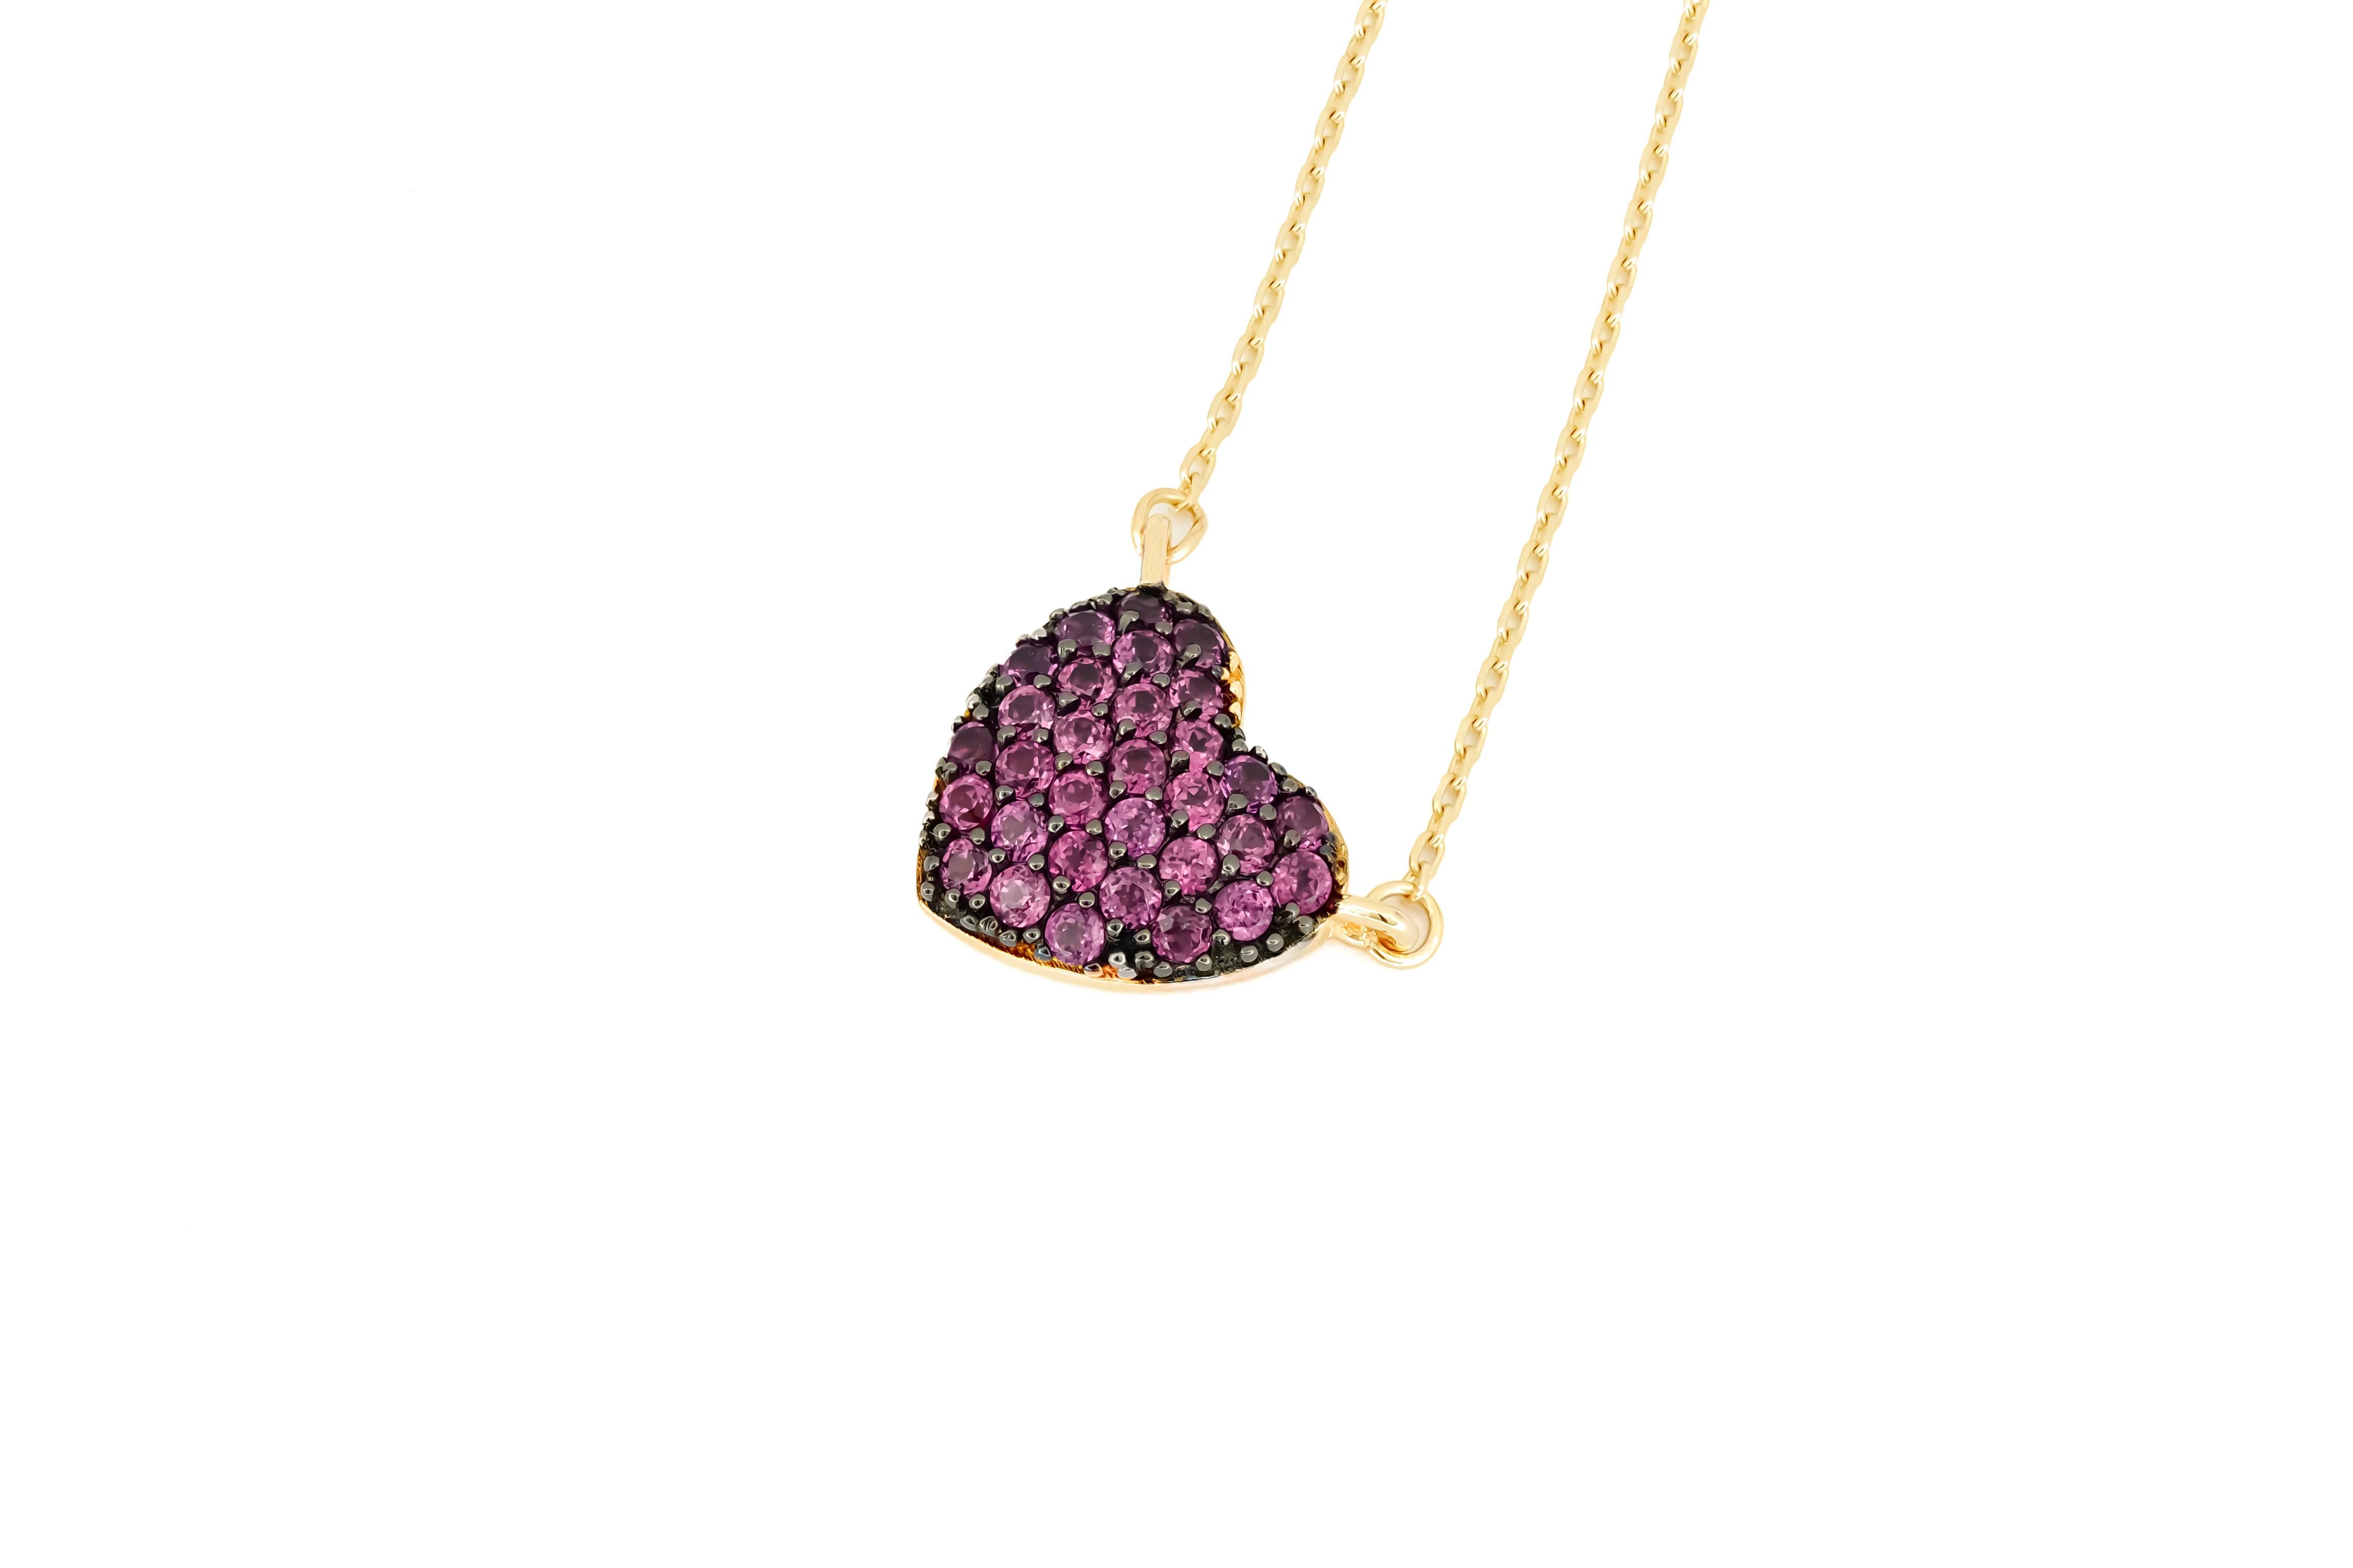 Women's Heart shaped 14k gold pendant necklace. 